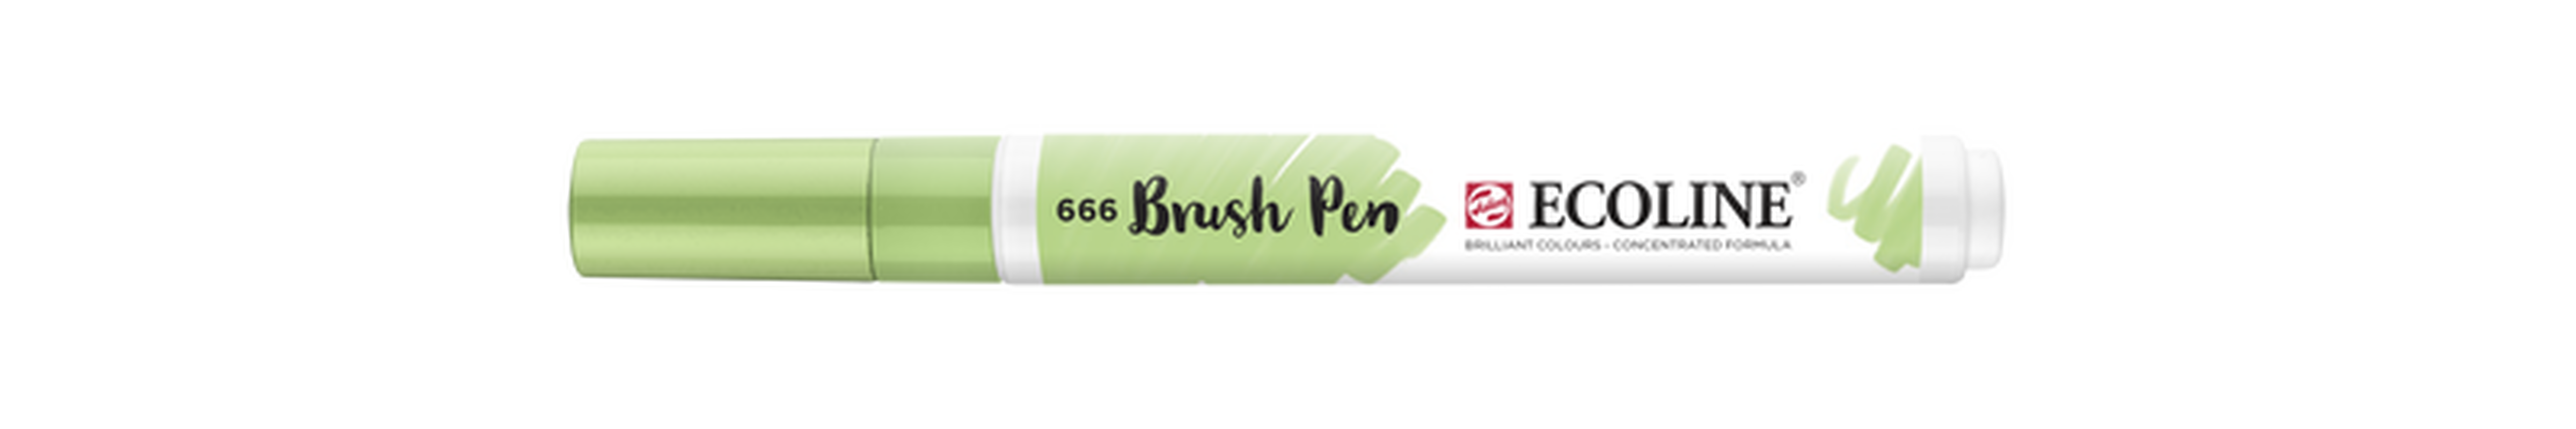 Talens Pinselstift Ecoline Nummer 666 Farbe Grün Pastell